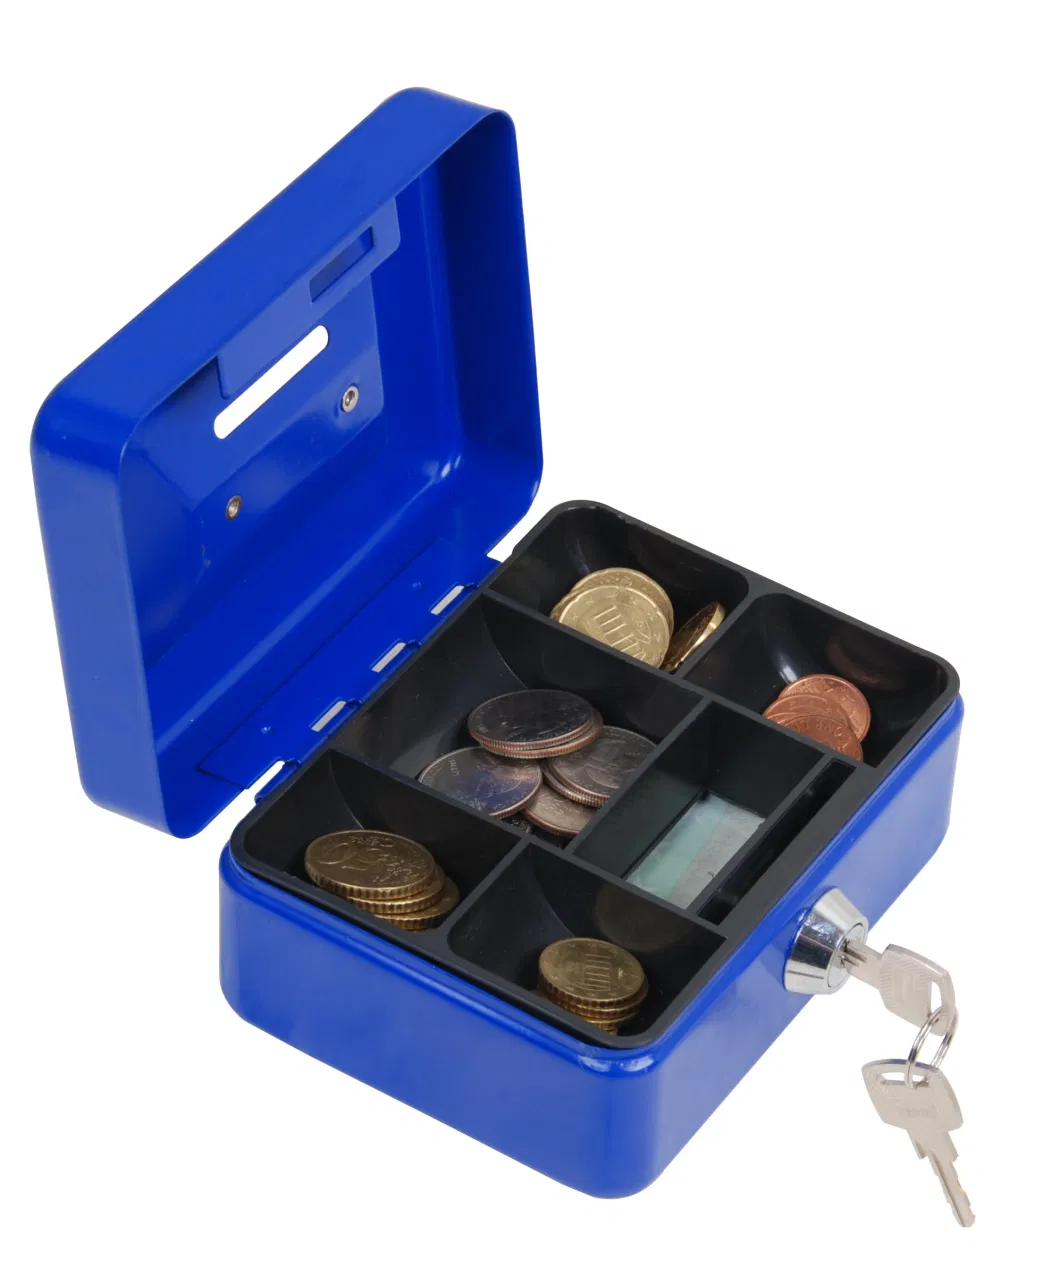 Cash Box with Money Tray, Safe Lock Box with Key